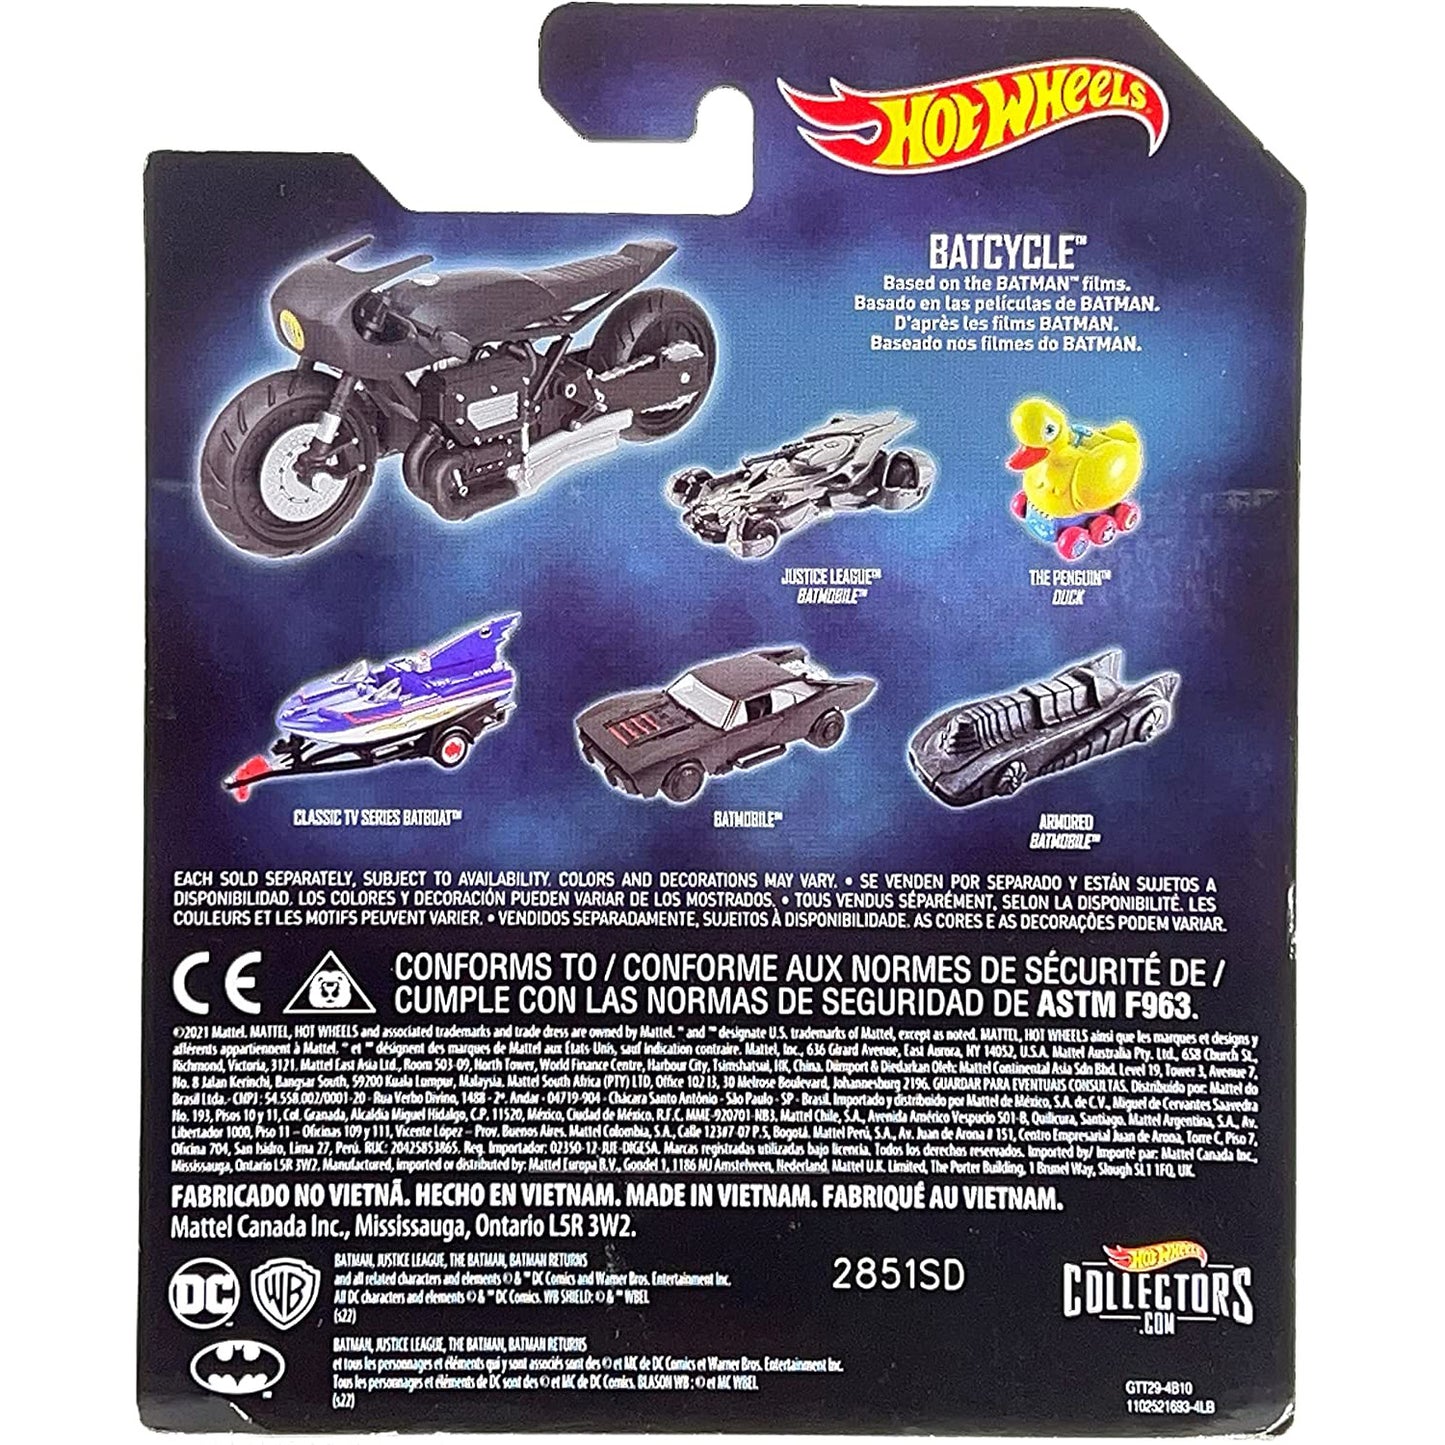 Hot Wheels The Batman: Batmobile: 1:50 Scale Diecast